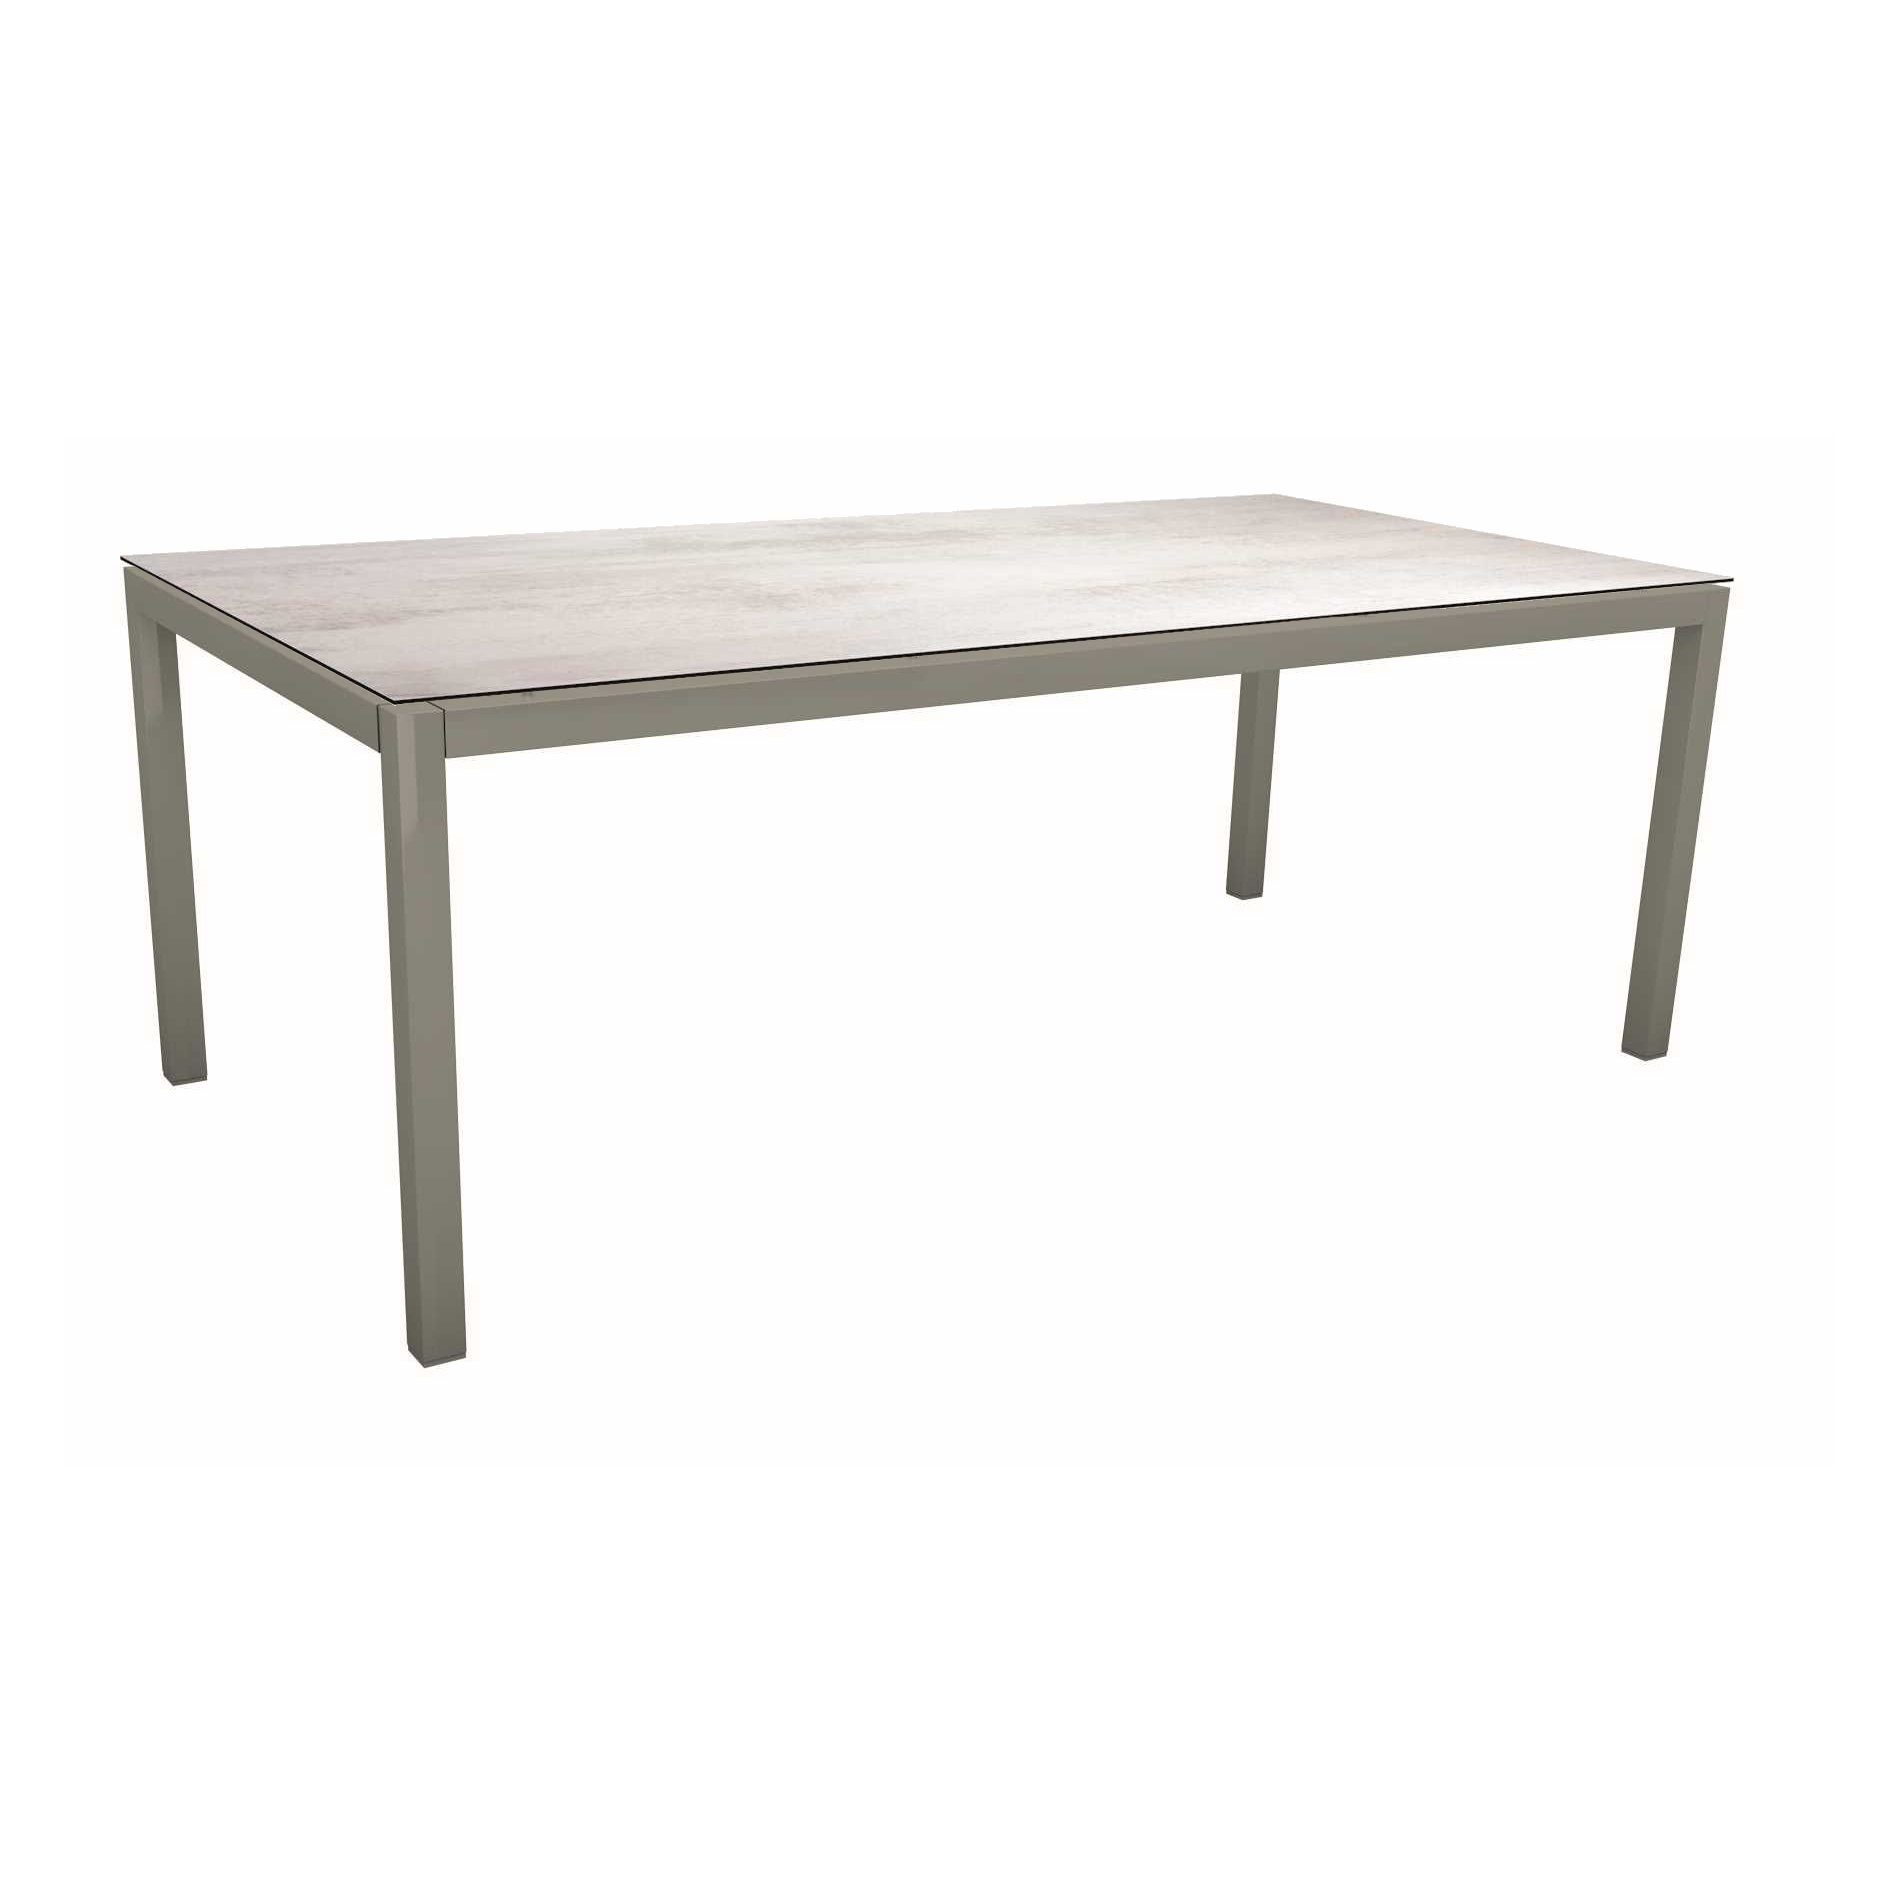 Stern Tischsystem, Gestell Aluminium graphit, Tischplatte HPL Zement hell, 200x100 cm